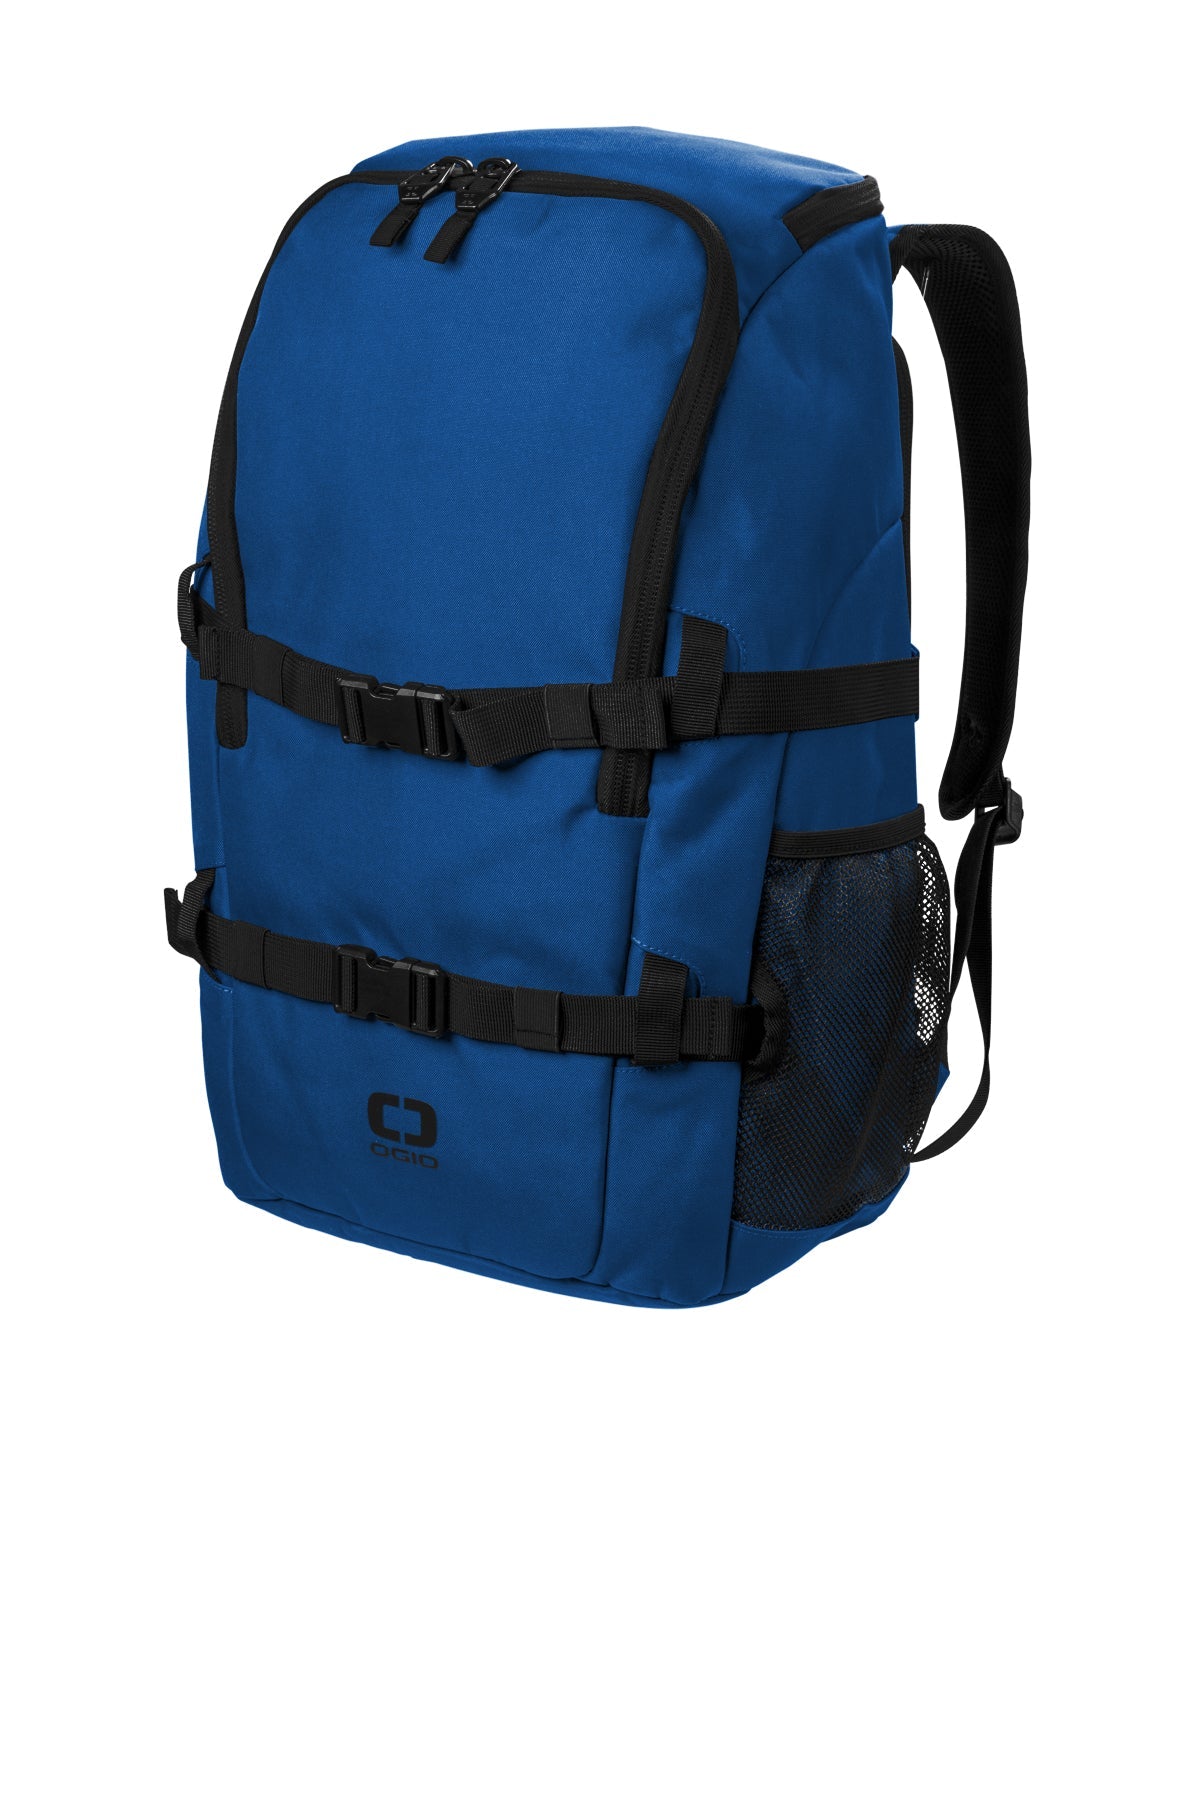 OGIO Street Customzied Backpacks, Force Blue